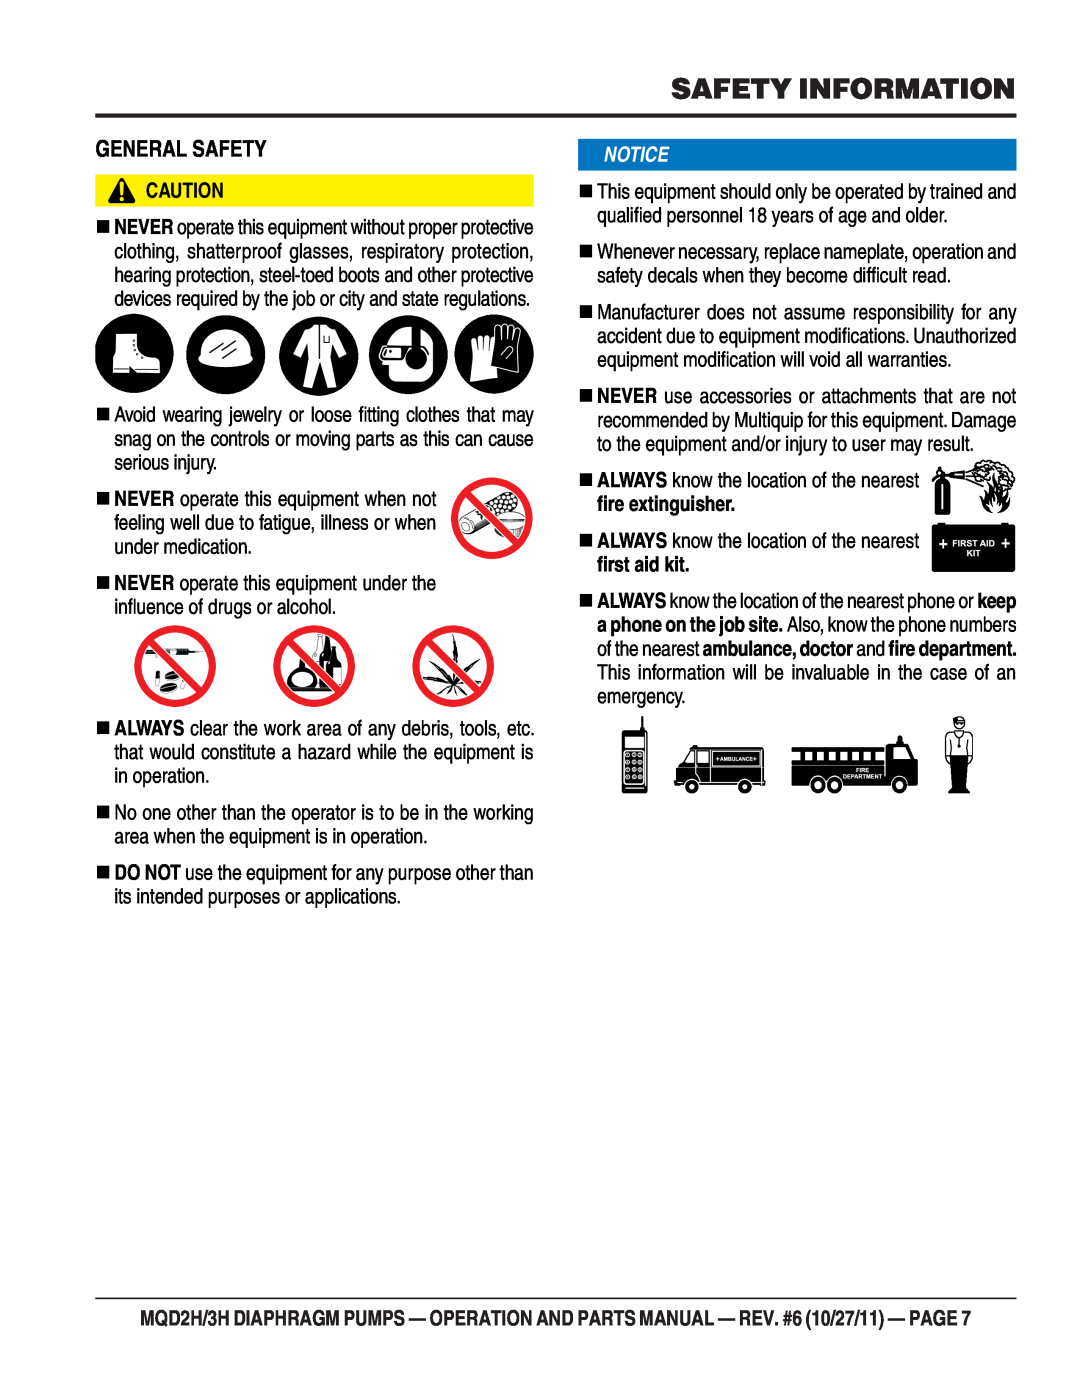 Multiquip MQD2H manual General Safety, ﬁre extinguisher, ﬁrst aid kit, Safety Information 